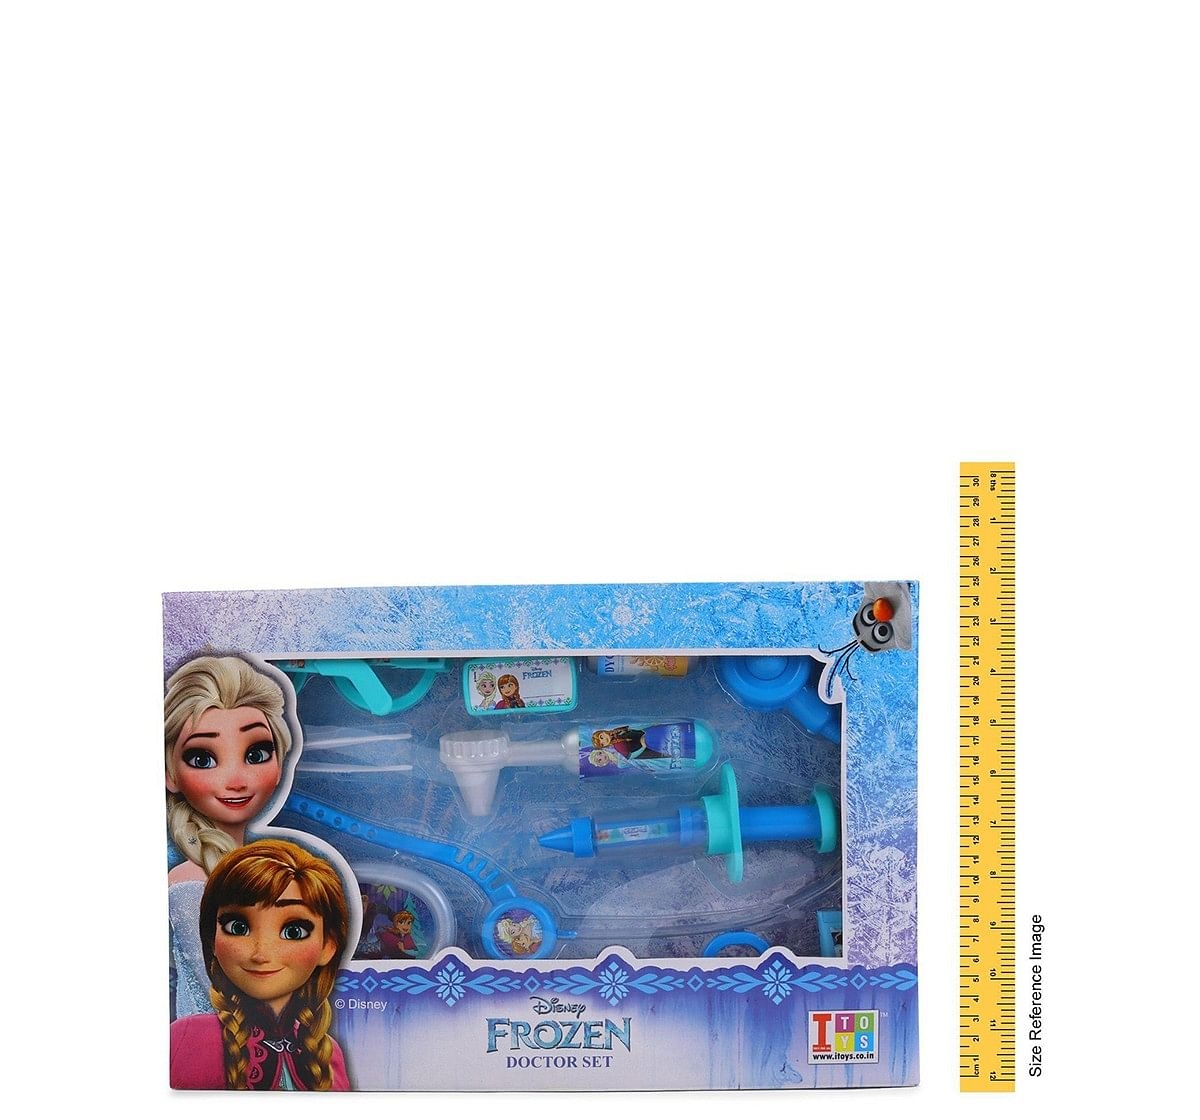 I Toys Frozen Docter Set Roleplay Sets for Kids Age 4Y+